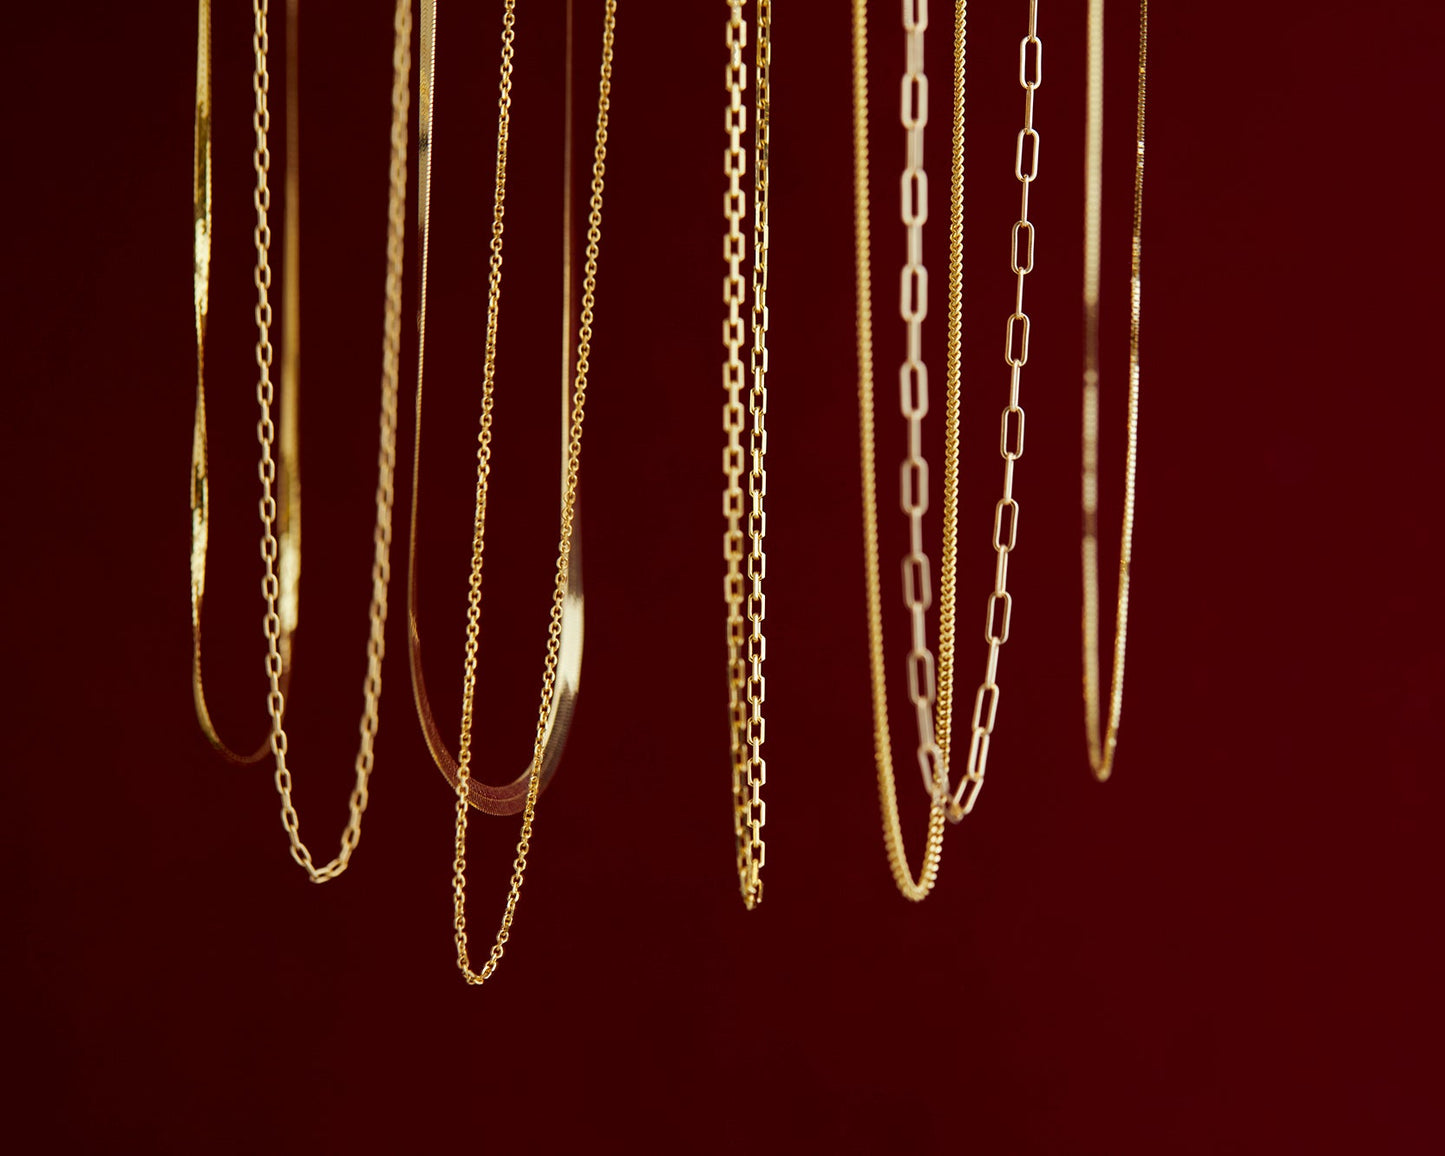 16" Stella Chain Necklace